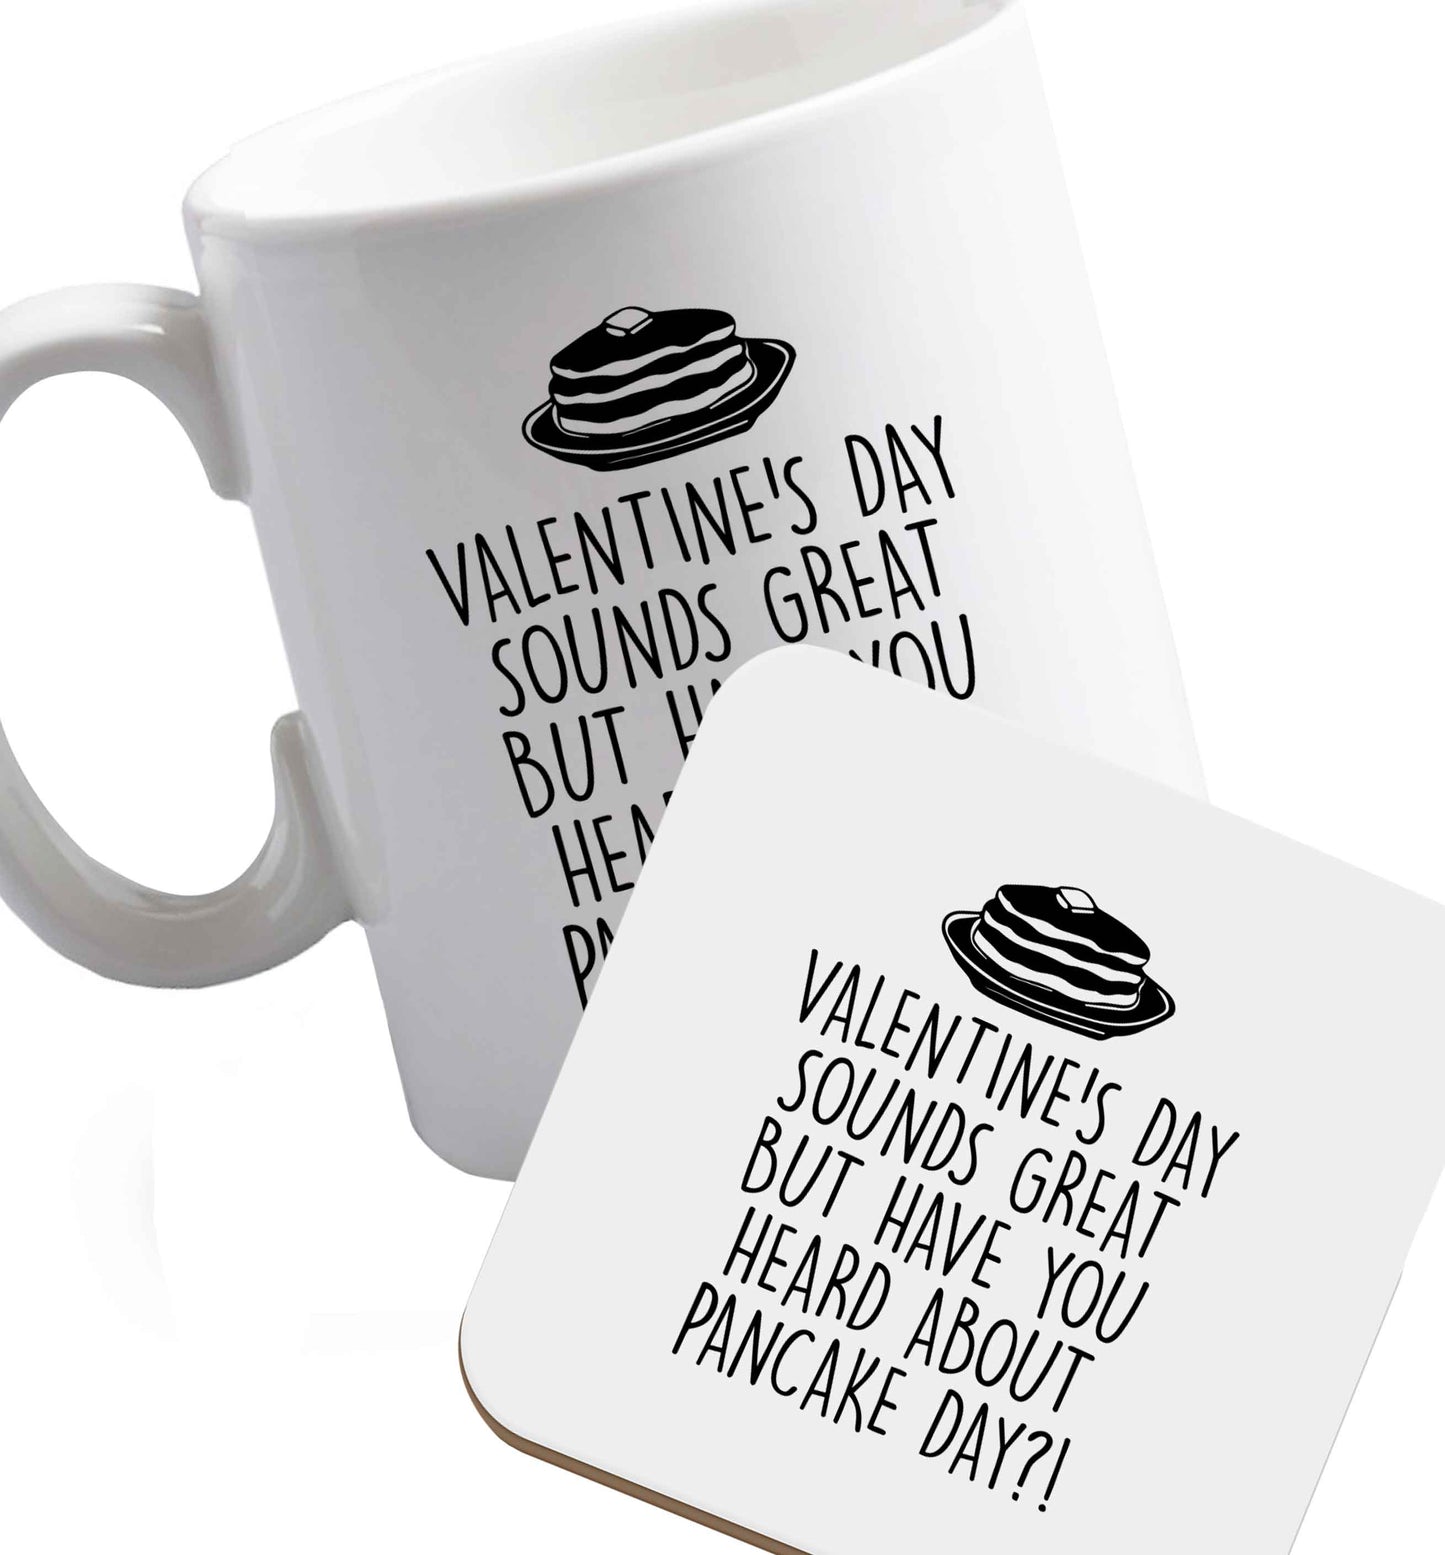 10 oz Valentine's Day Great Heard Pancake Day ceramic mug and coaster set right handed